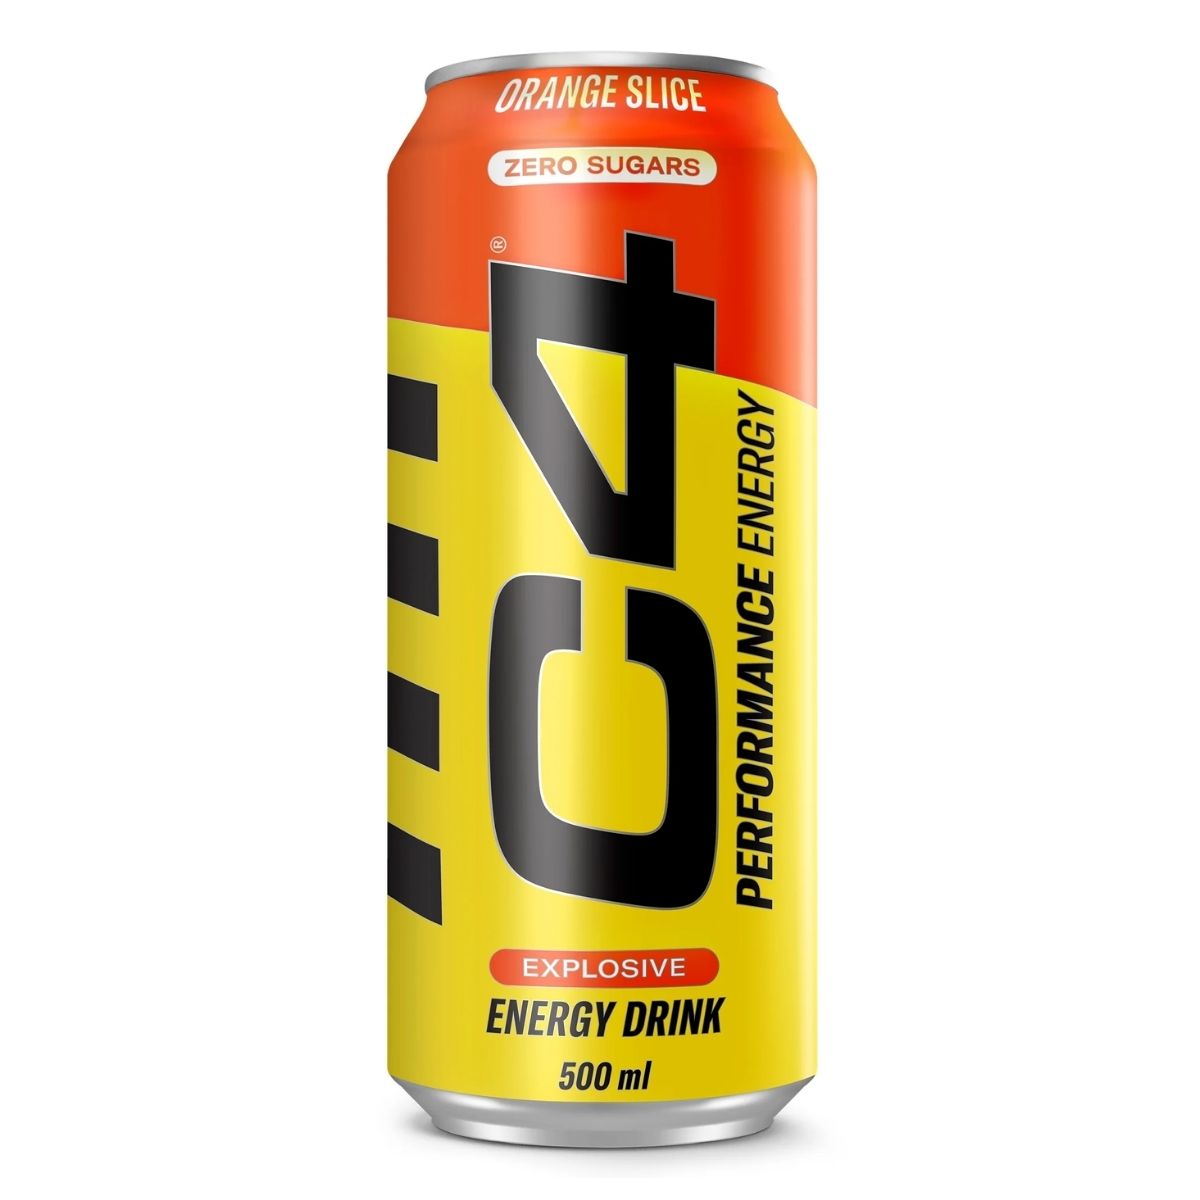 C4 - Performance Energy Orange Slice - 500ml energy drink on a white background.